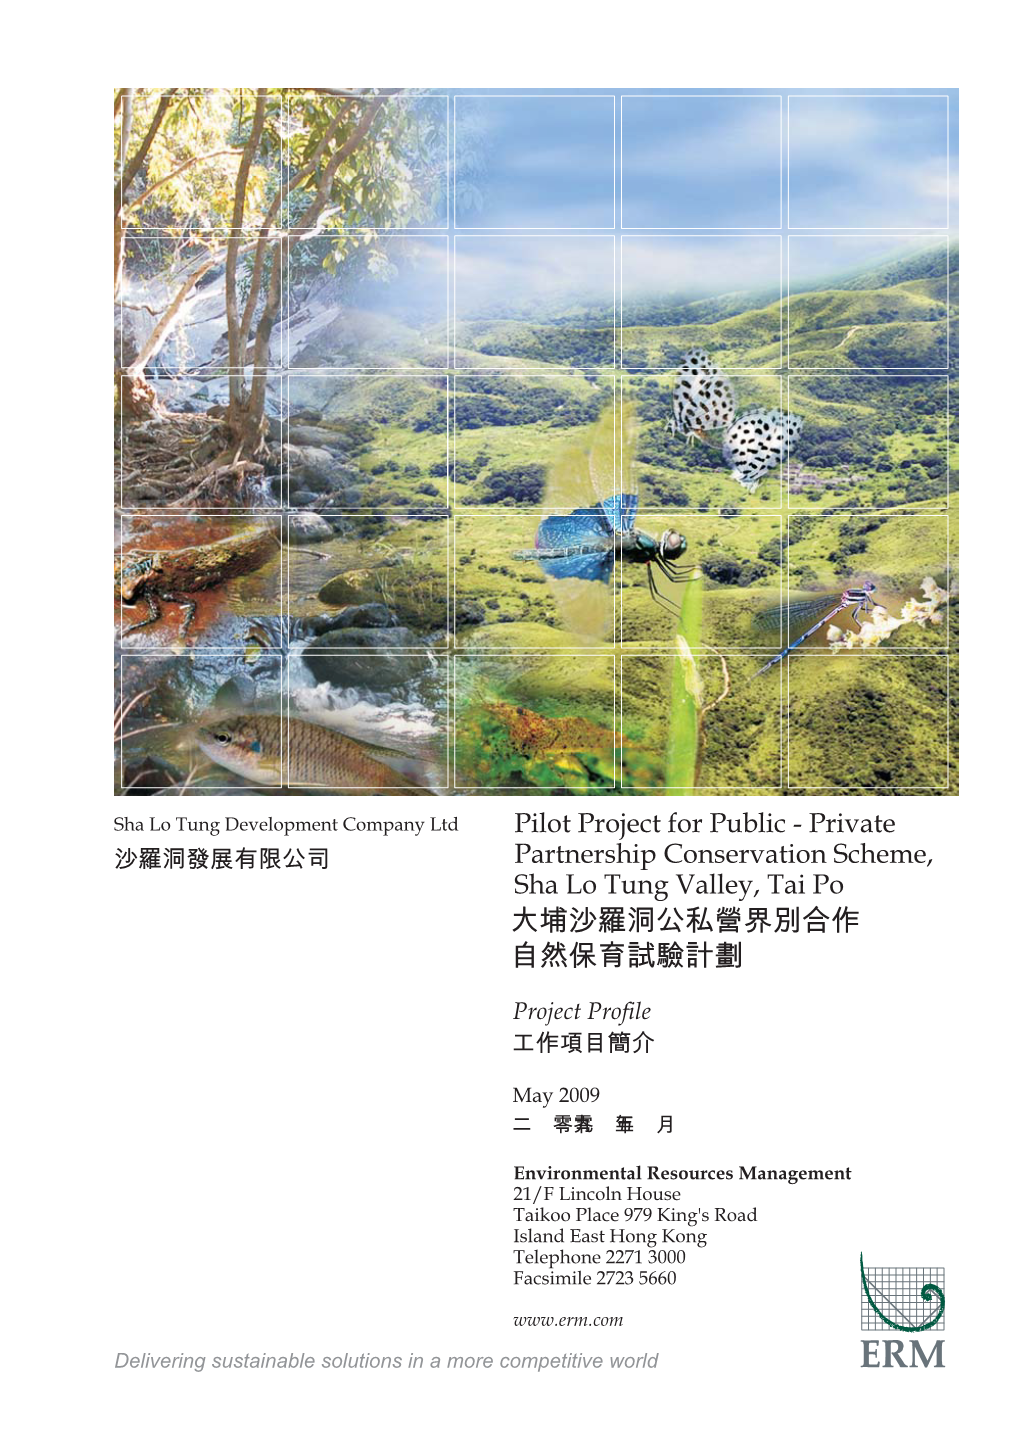 Private Partnership Conservation Scheme, Sha Lo Tung Valley, Tai Po 大埔沙羅洞公私營界別合作 自然保育試驗計劃